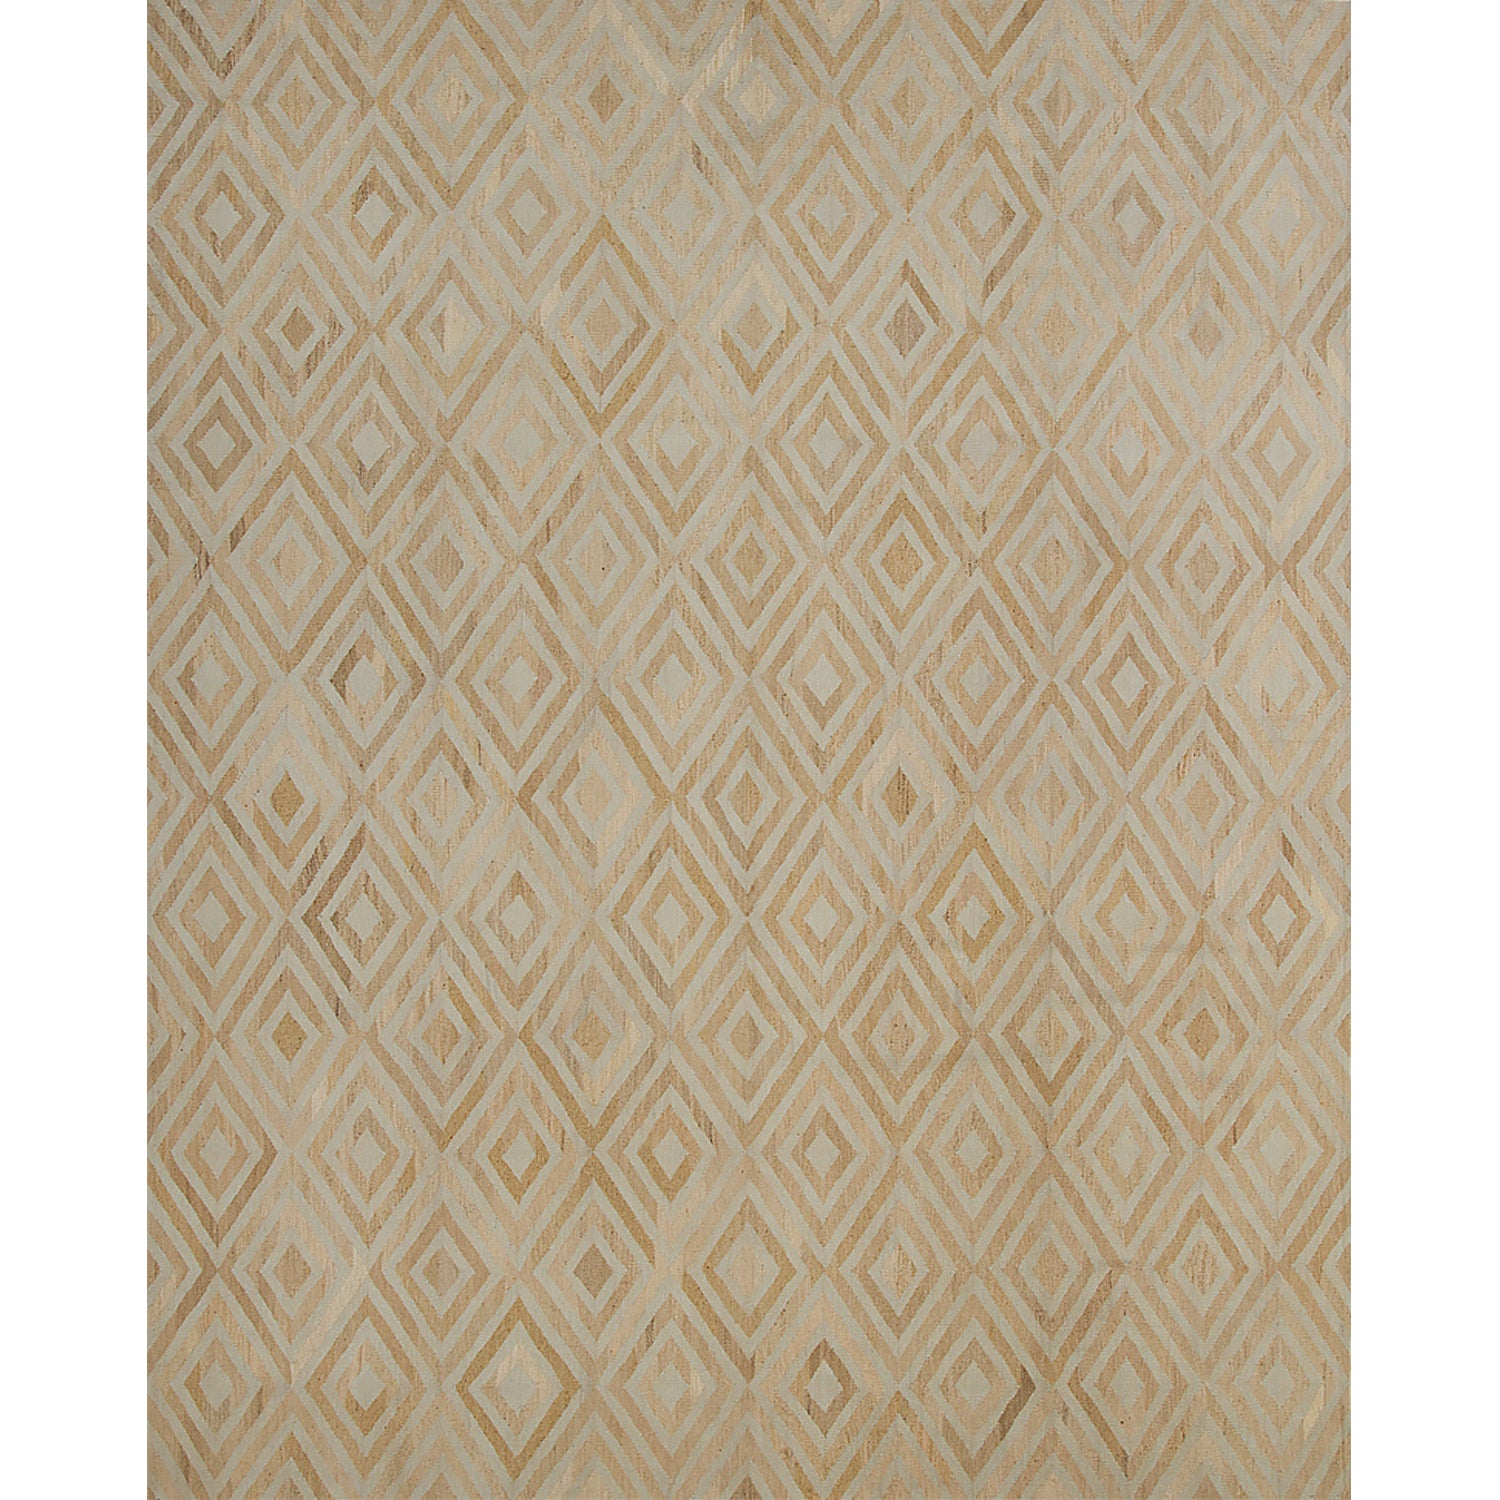 Large rectangular rug in an interlocking diamond pattern in white on a mottled cream field.